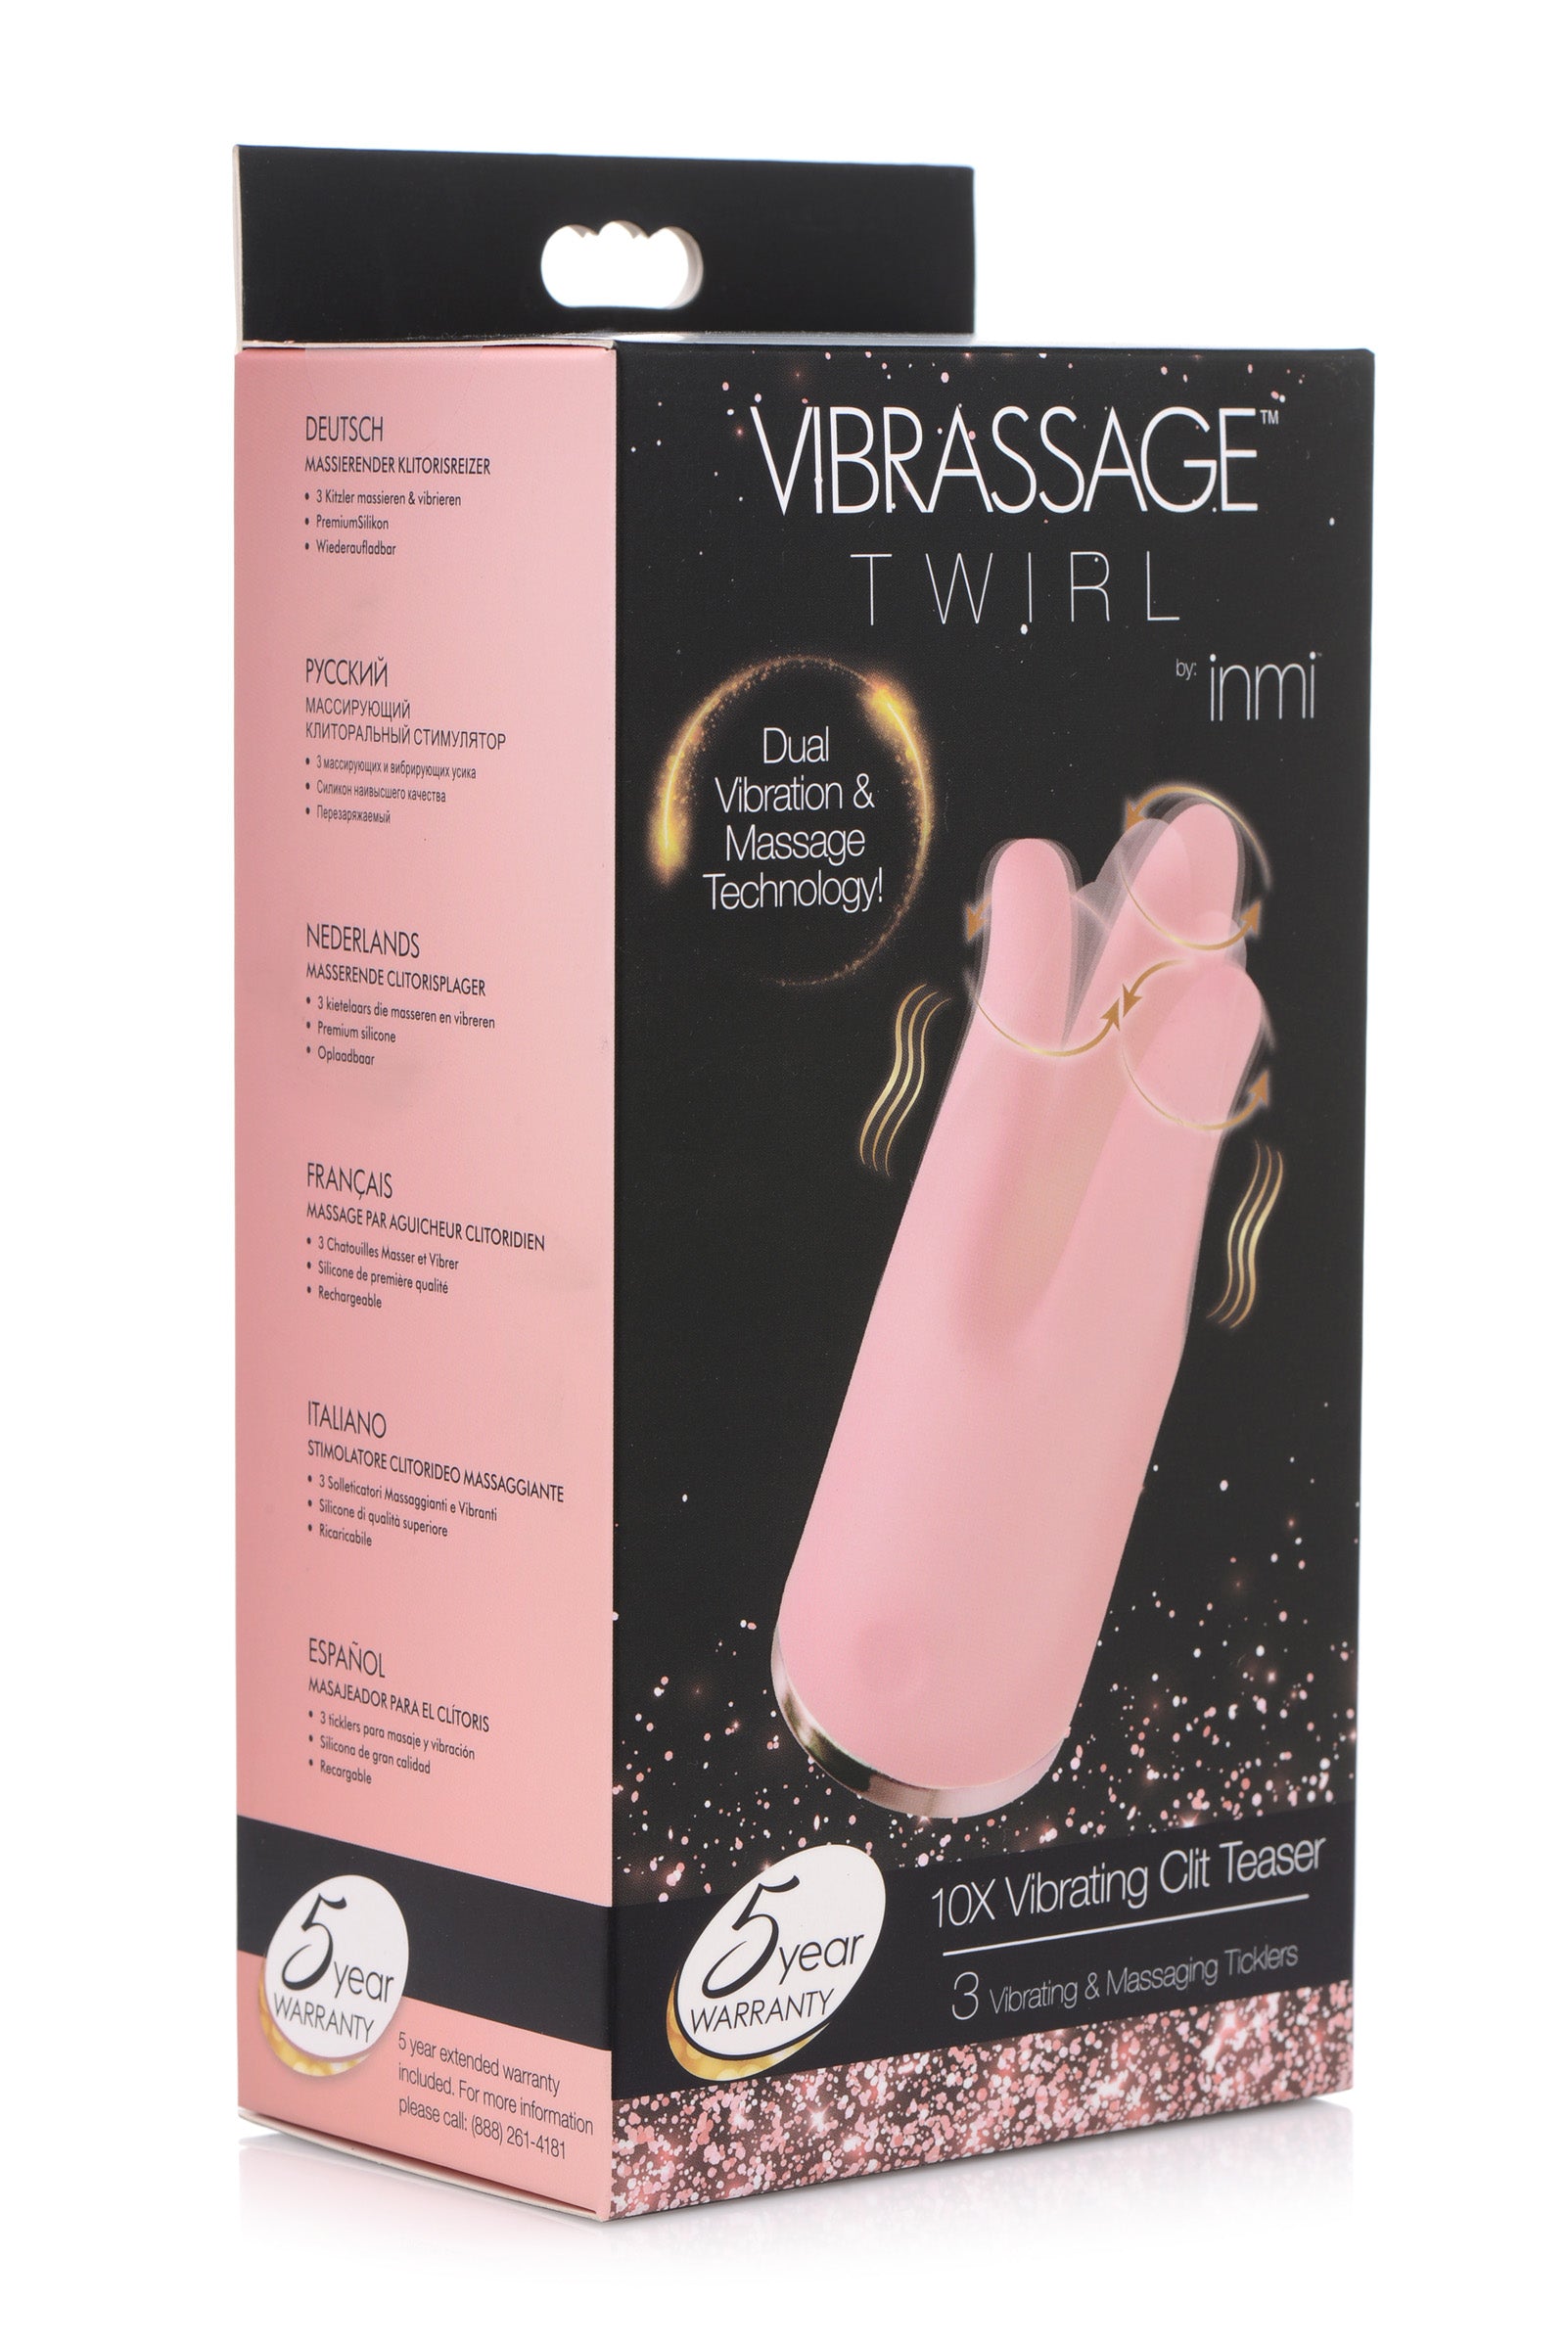 Vibrassage Twirl 10X Vibrating Clit Teaser - UABDSM